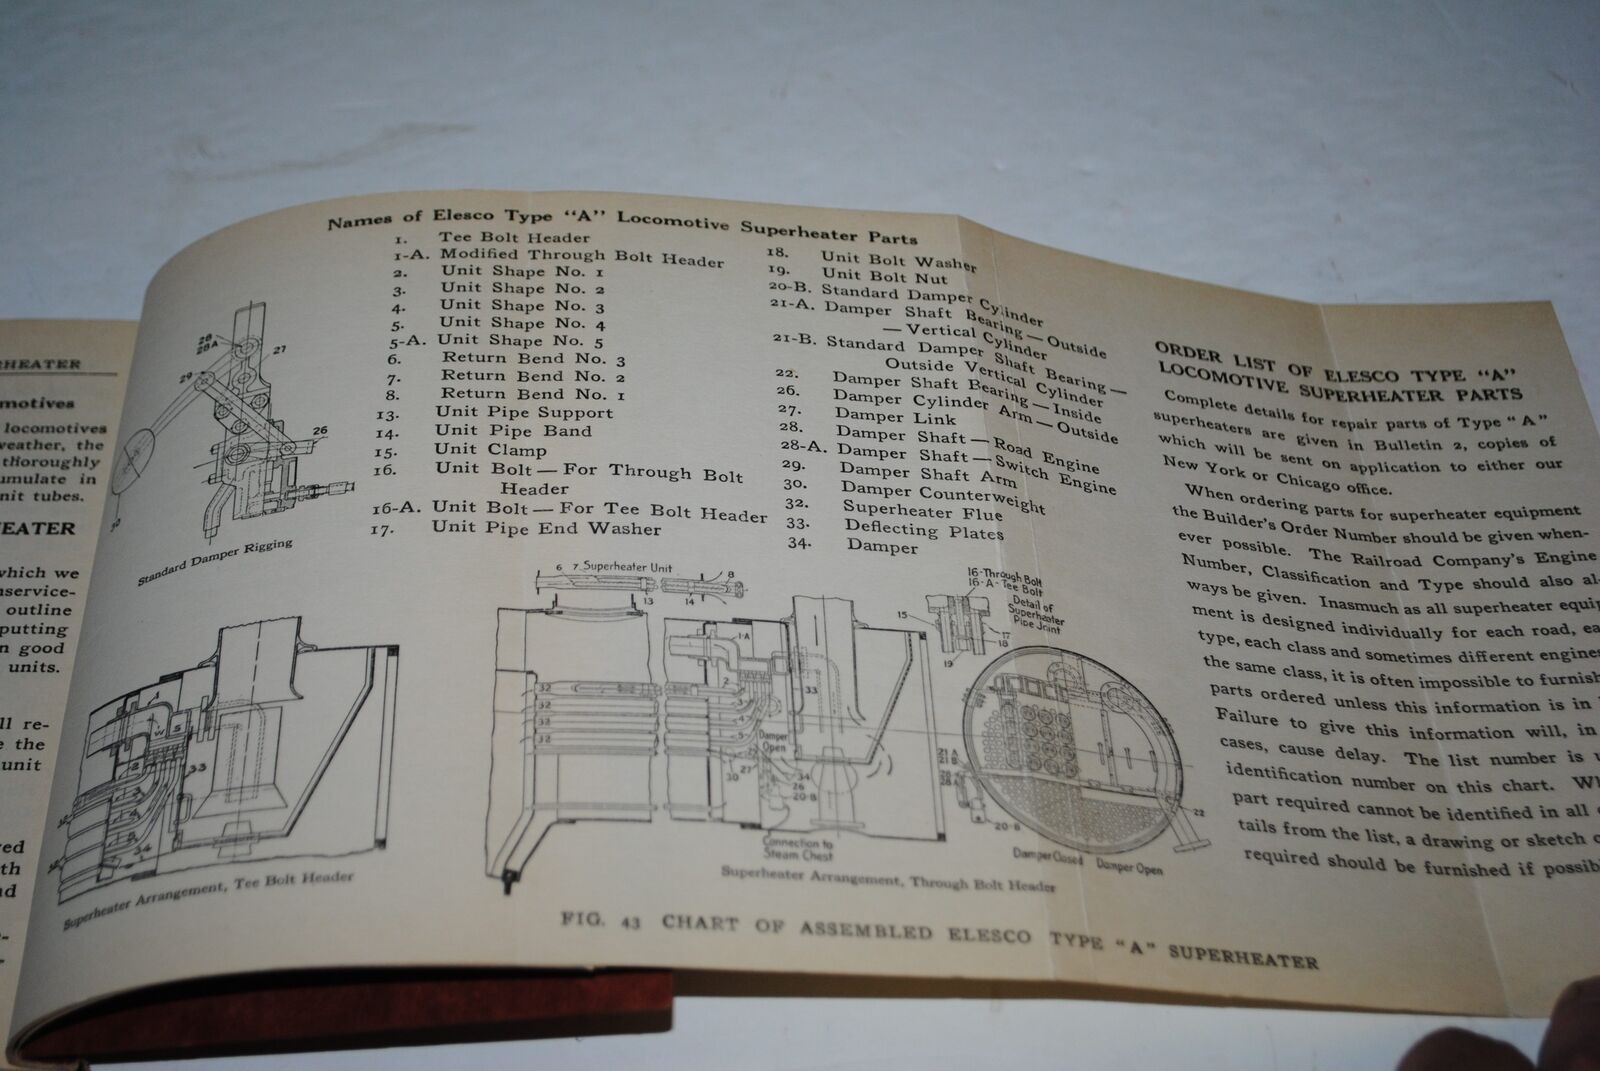 1925 Elesco Locomotive Superheater Operation, Install & Maintenance Manual